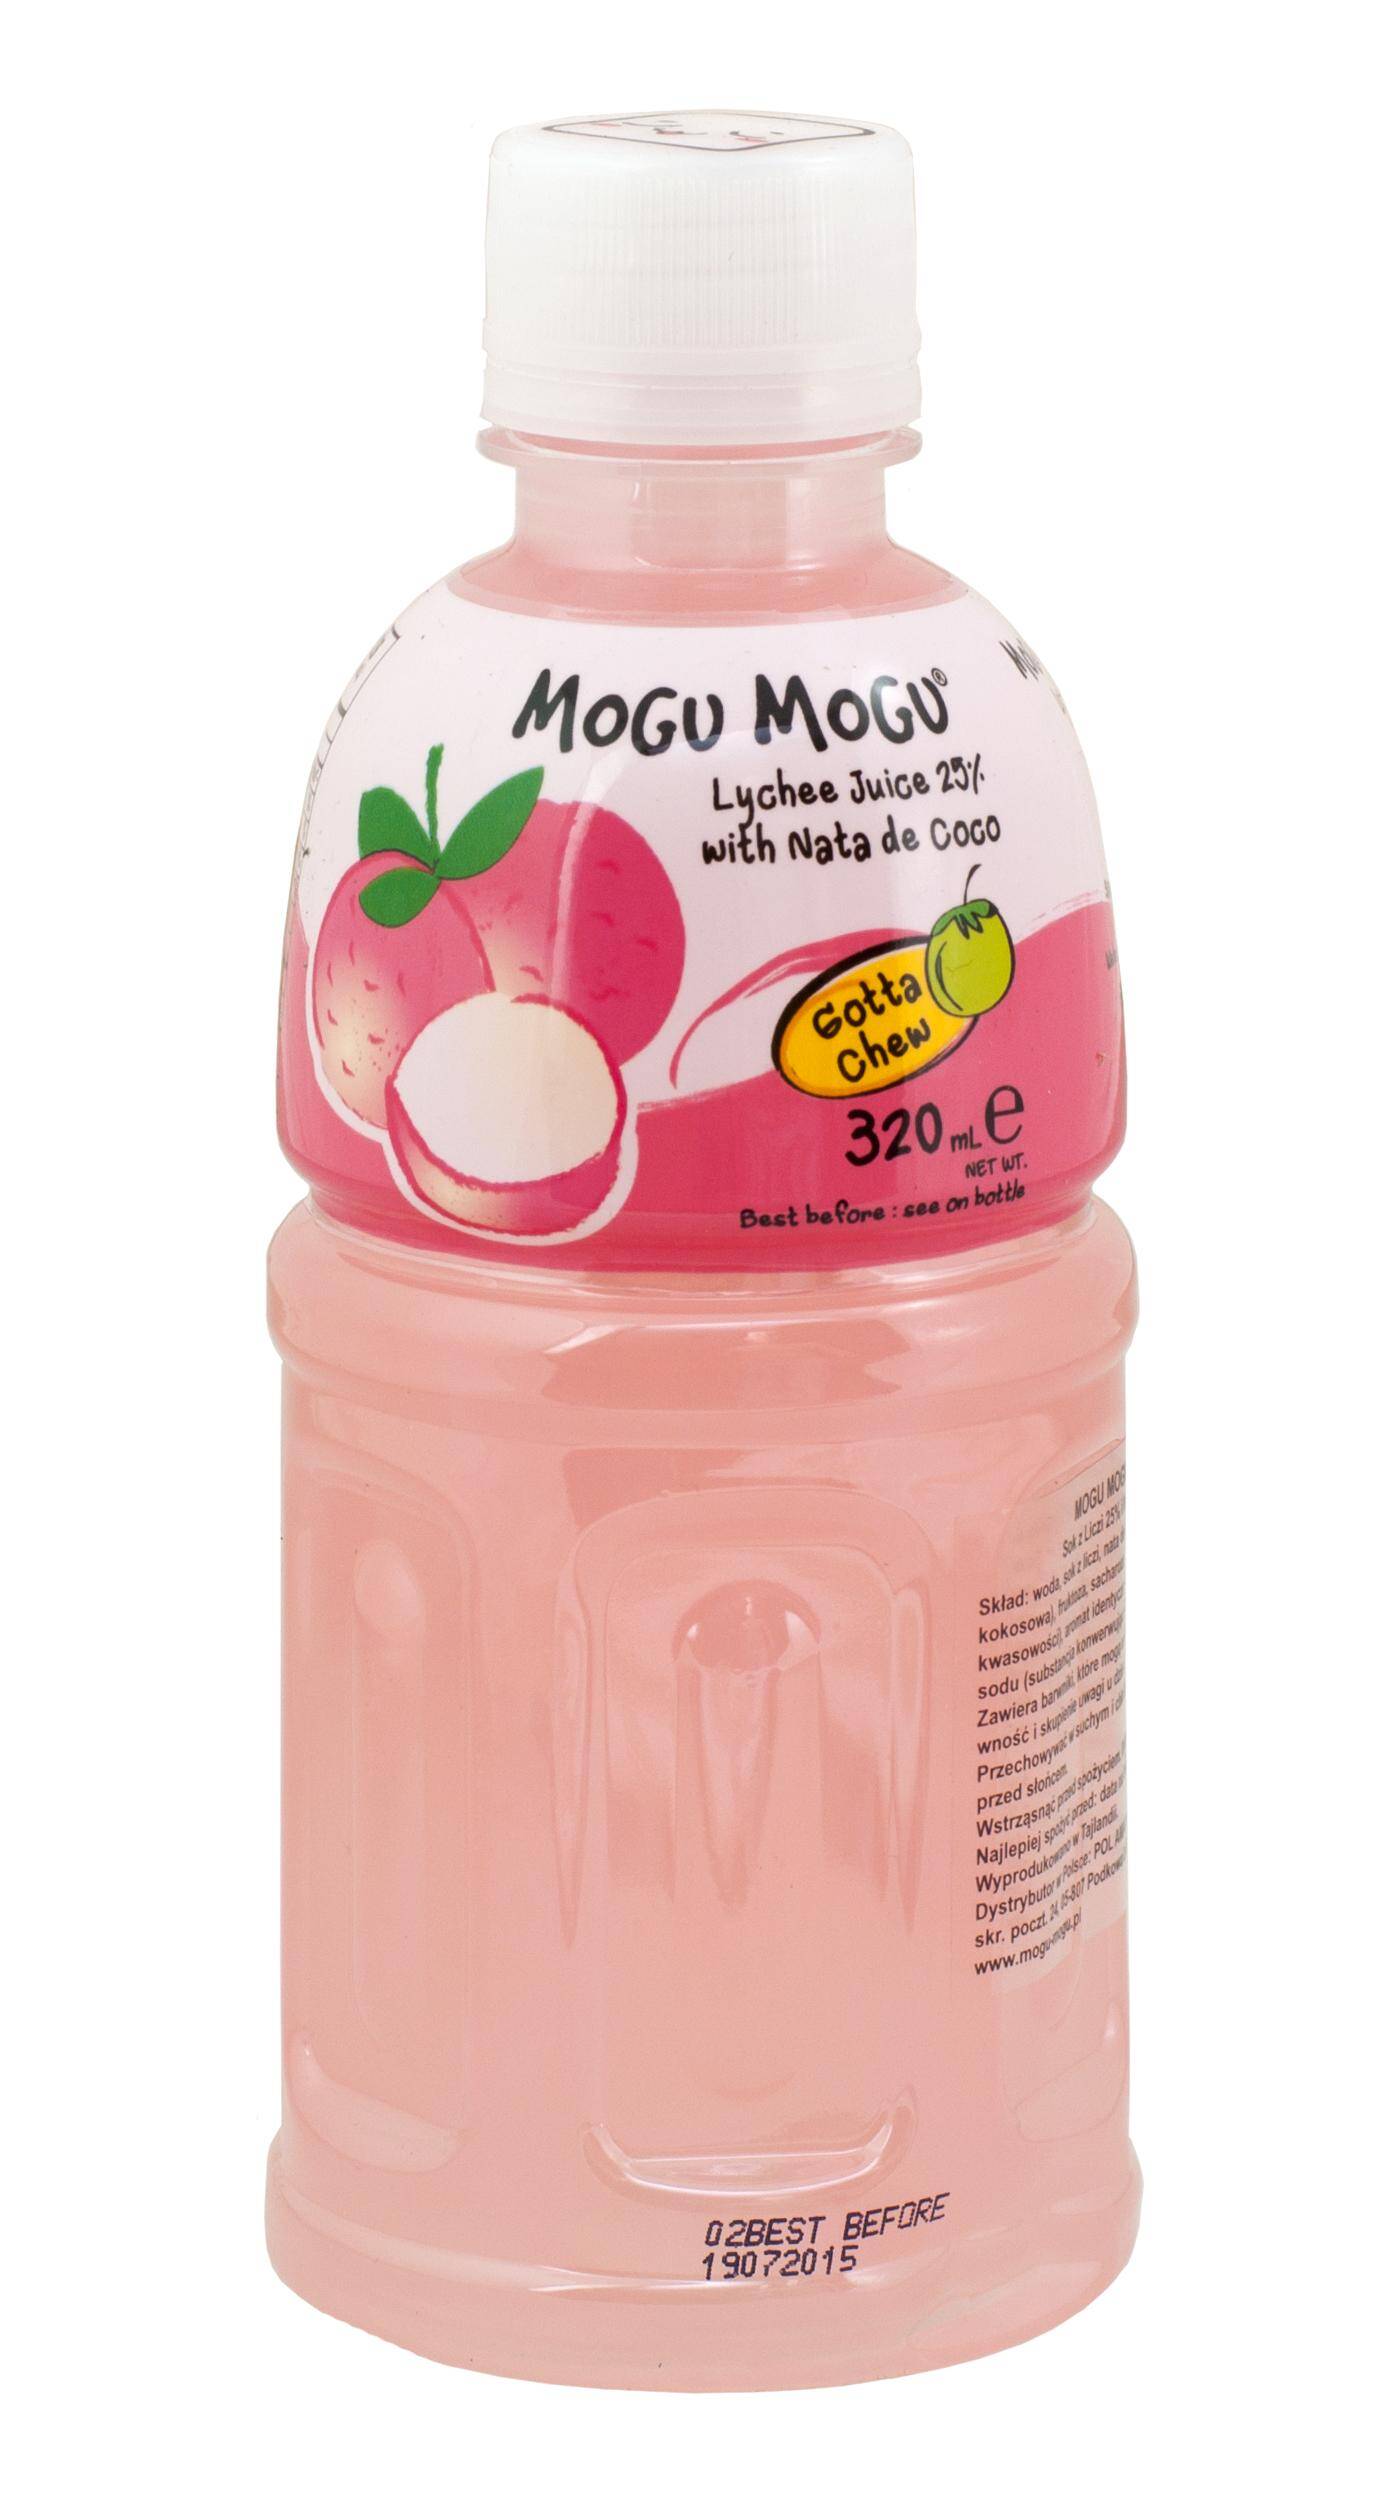 Mogu Mogu Liczi nata de coco 320ml/24